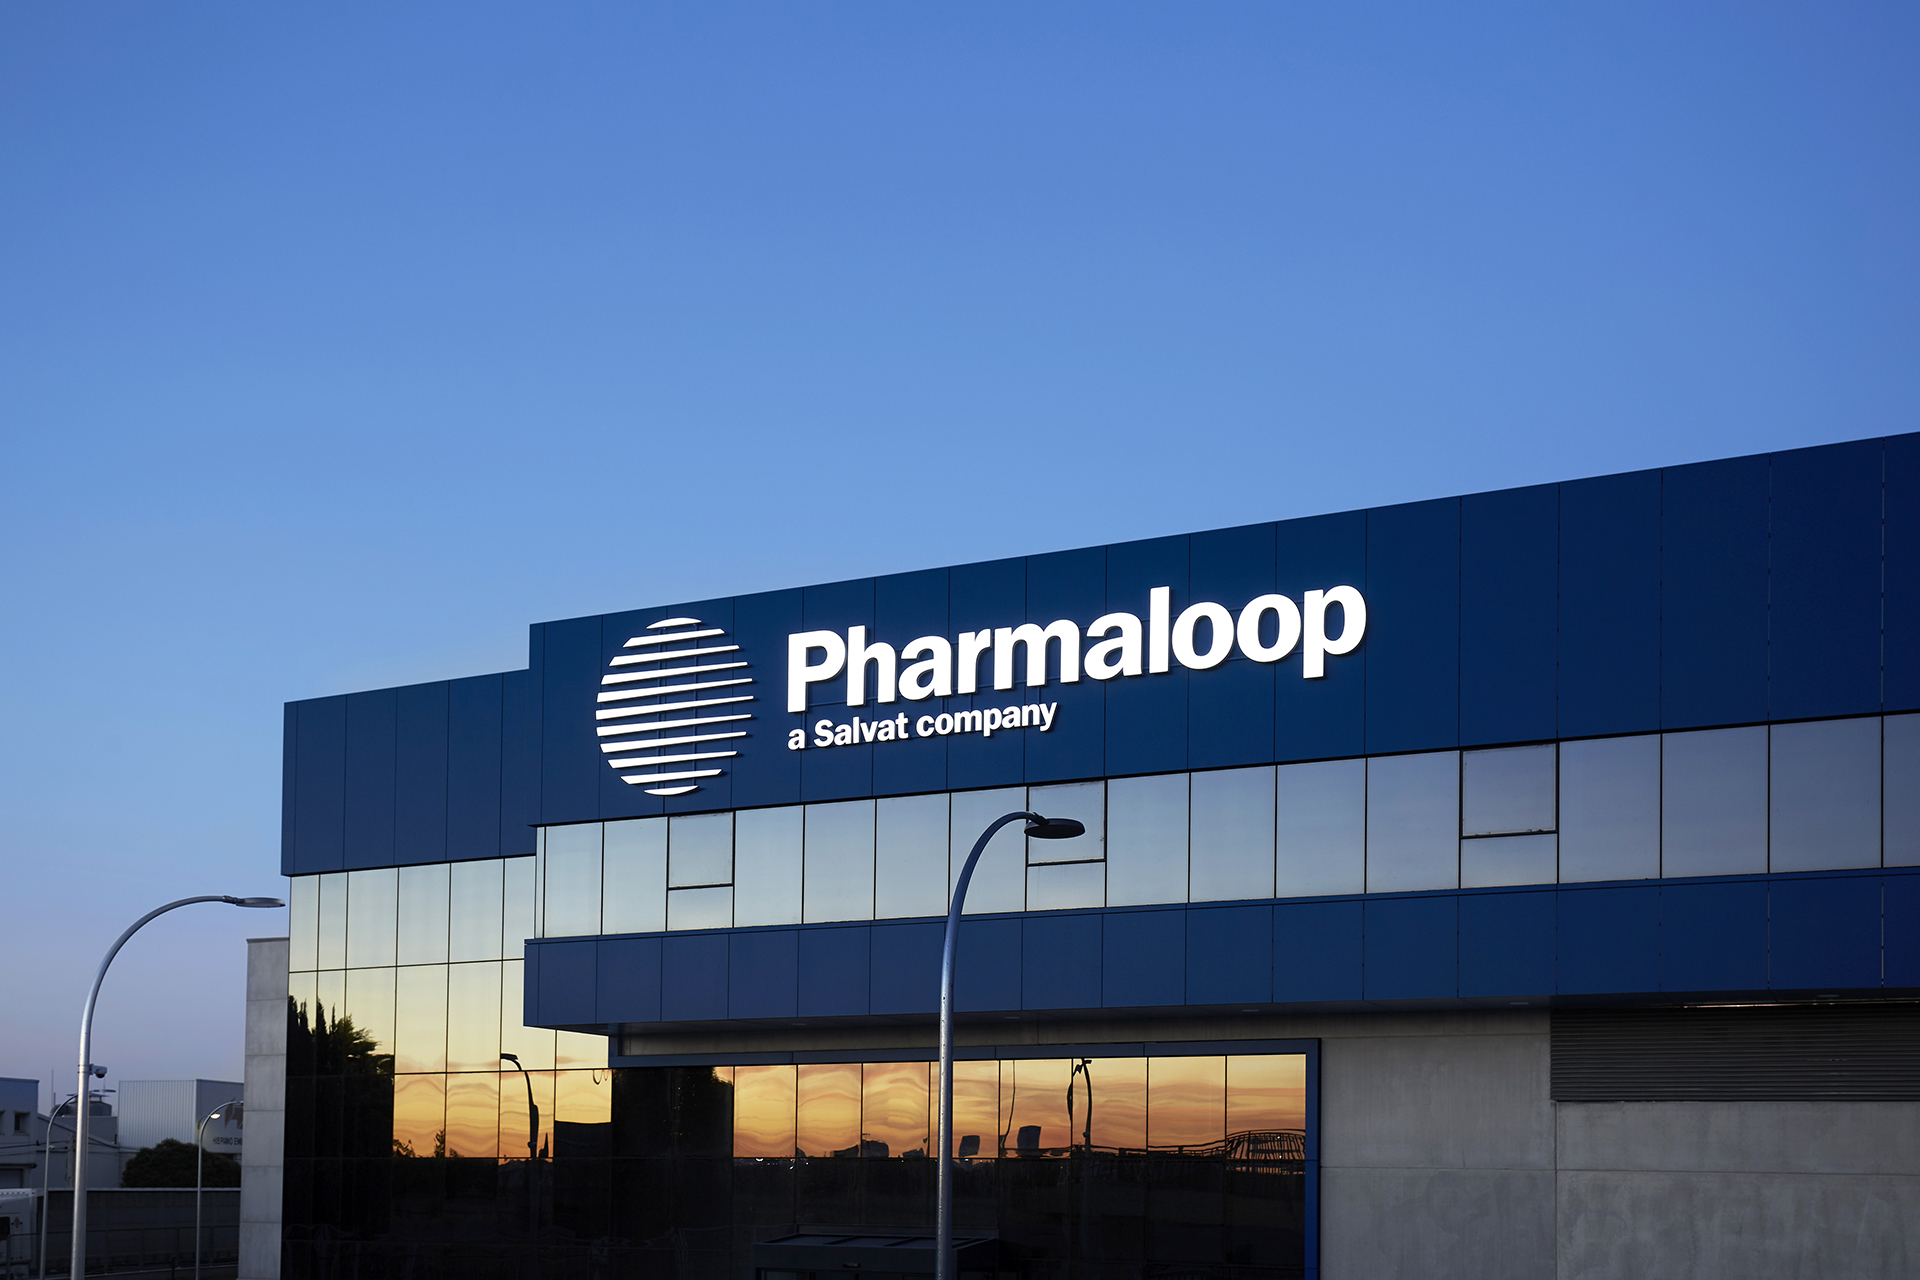 Salvat’s Pharmaloop Invests 65 million Euros in Its New Sterile Liquids Plant, located in Alcalá de Henares